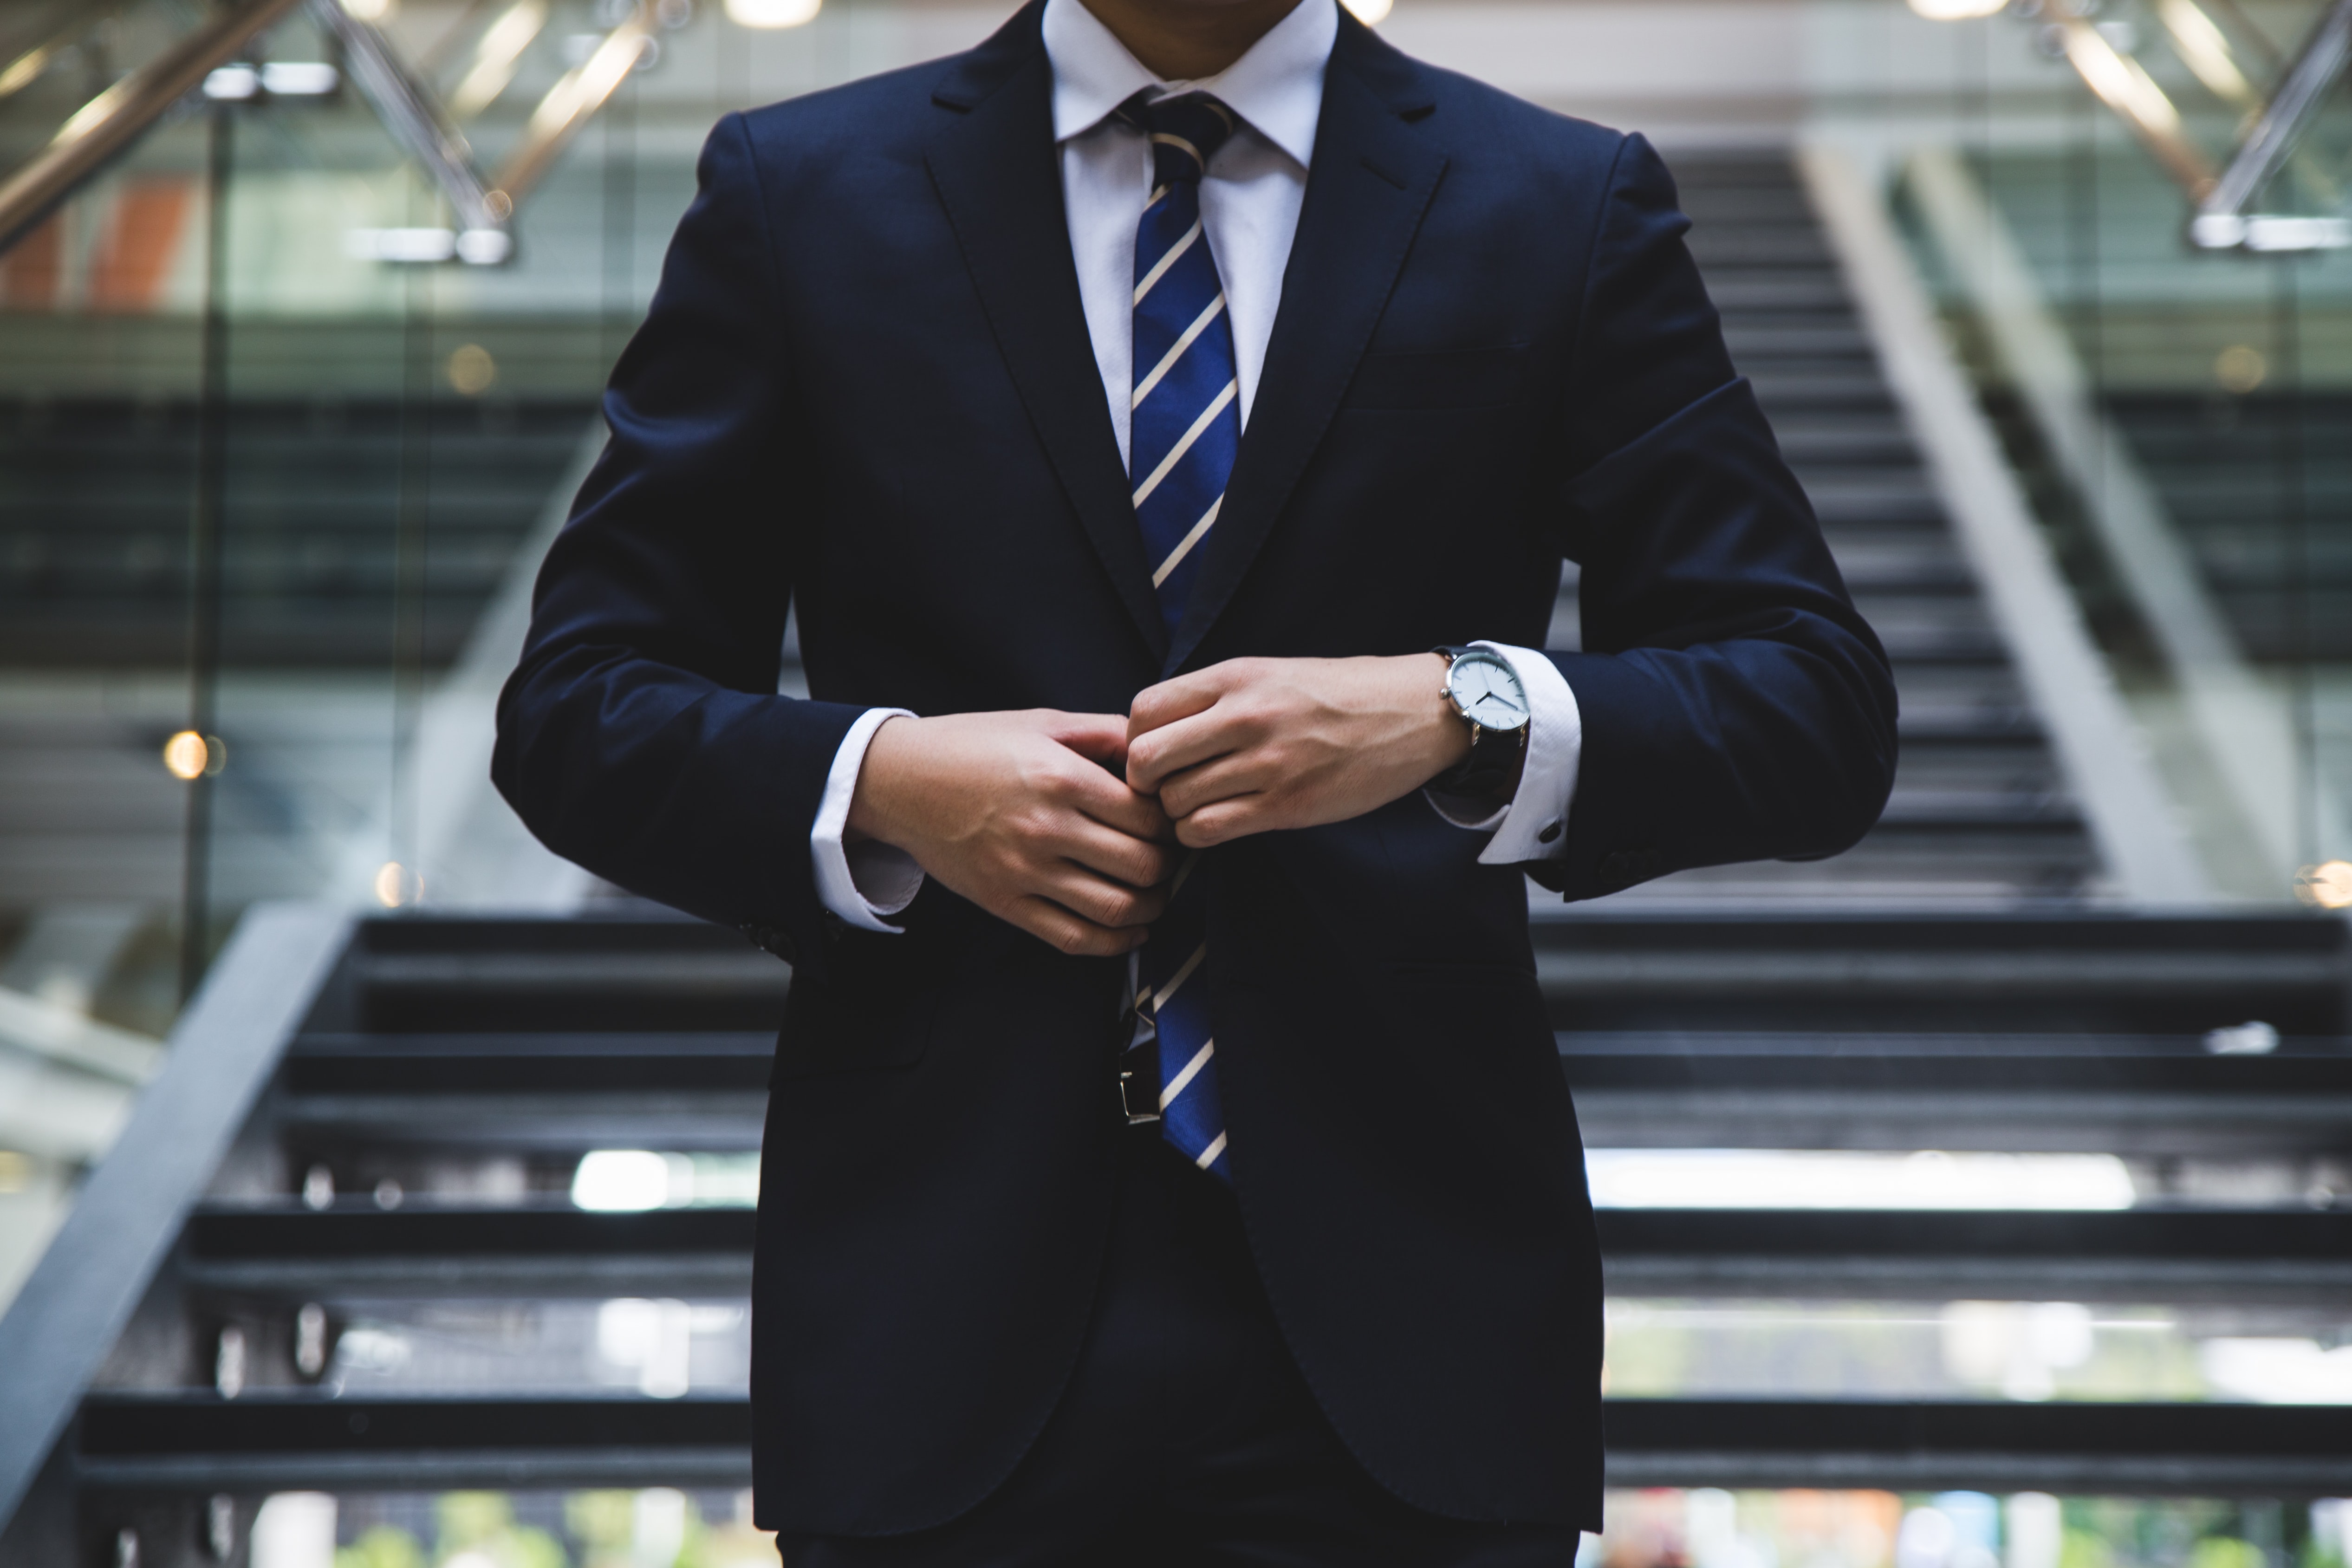 Business Formal: Dark suit and tie